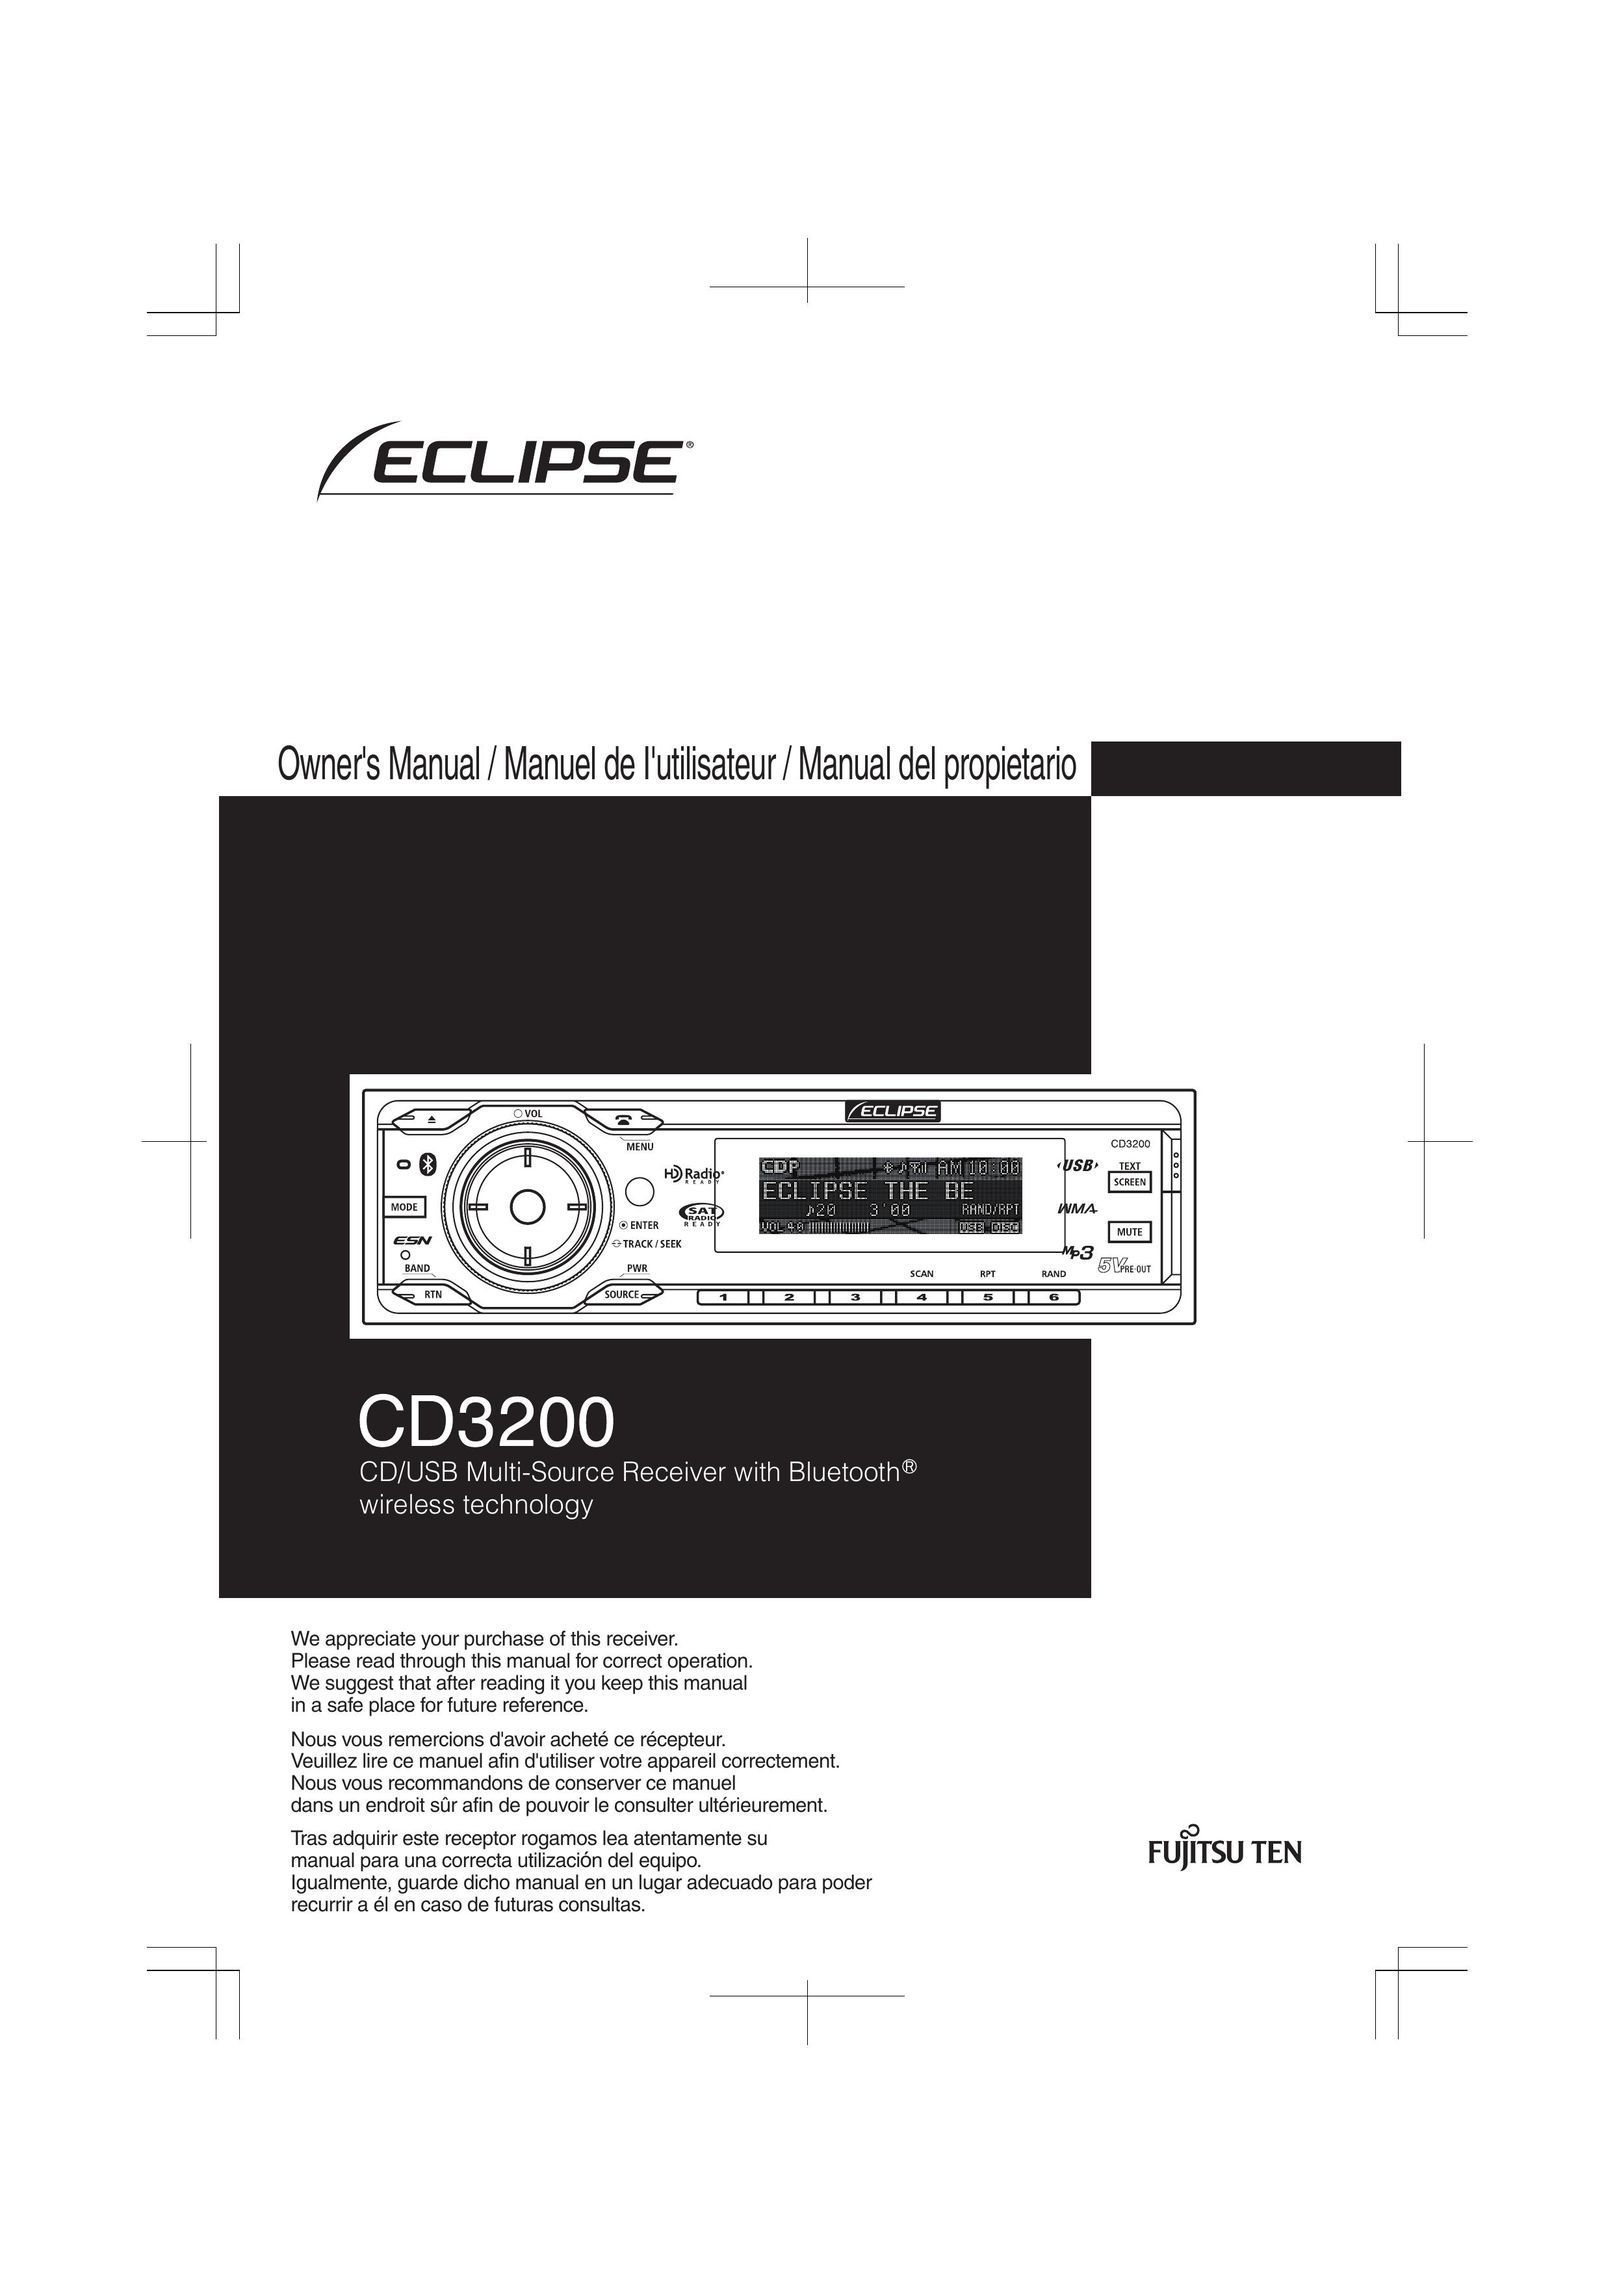 Eclipse - Fujitsu Ten CD3200 Stereo Receiver User Manual